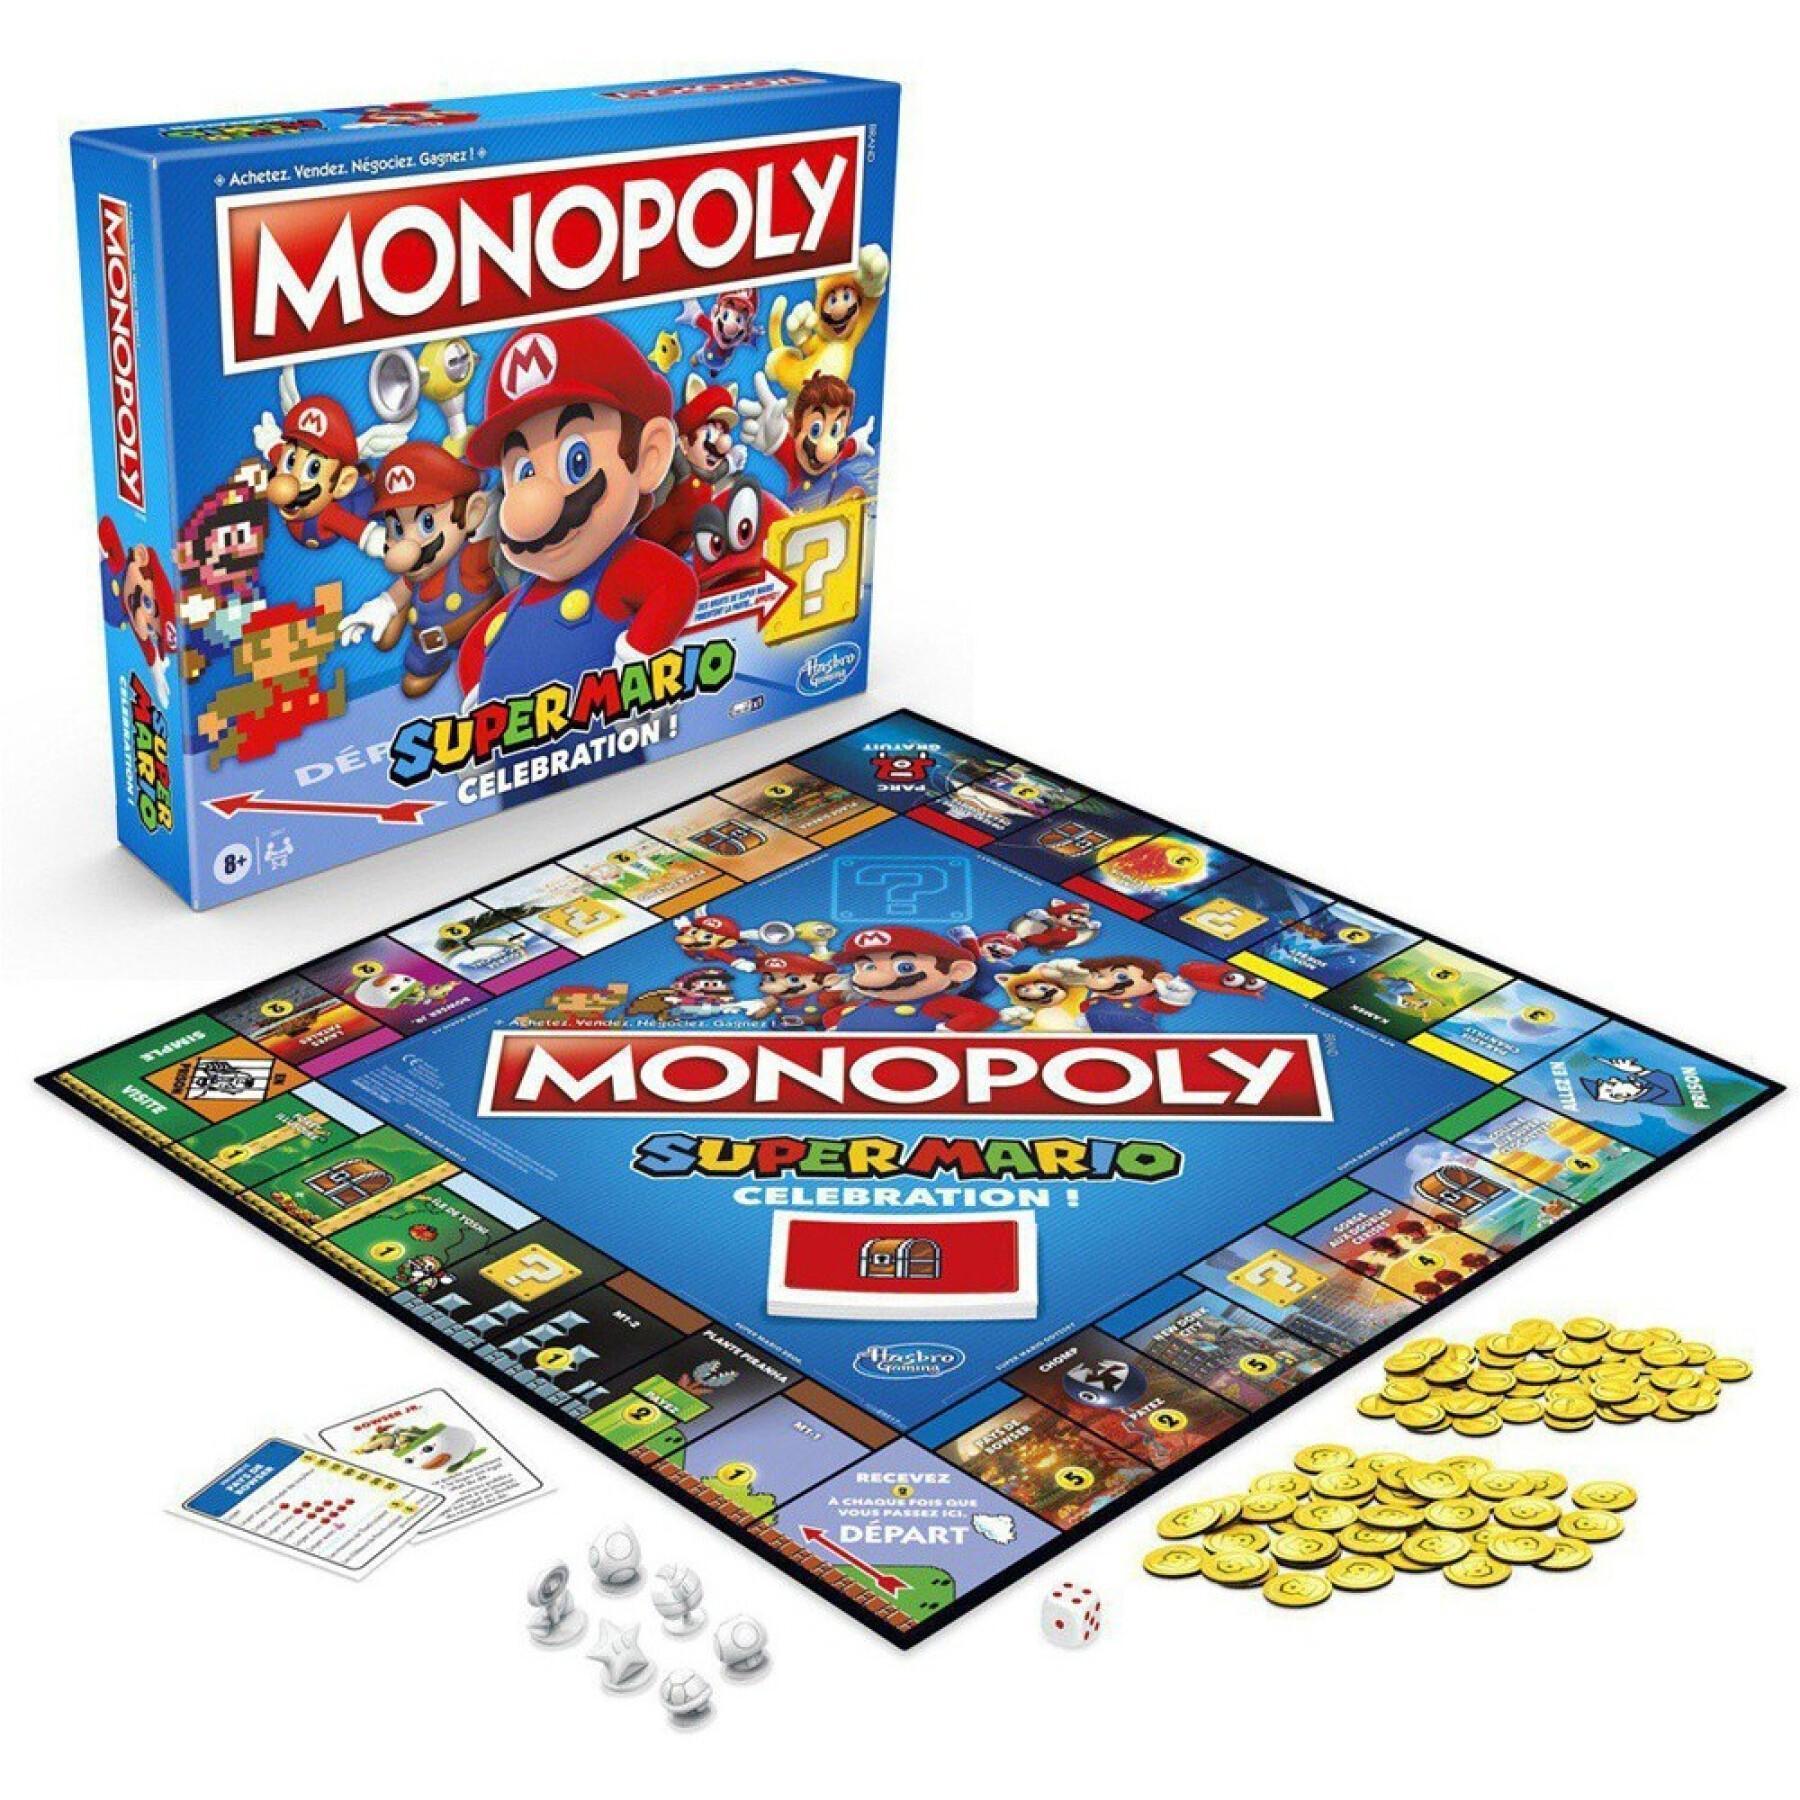 Gesellschaftsspiele Monopoly Hasbro France Super Mario Celebration